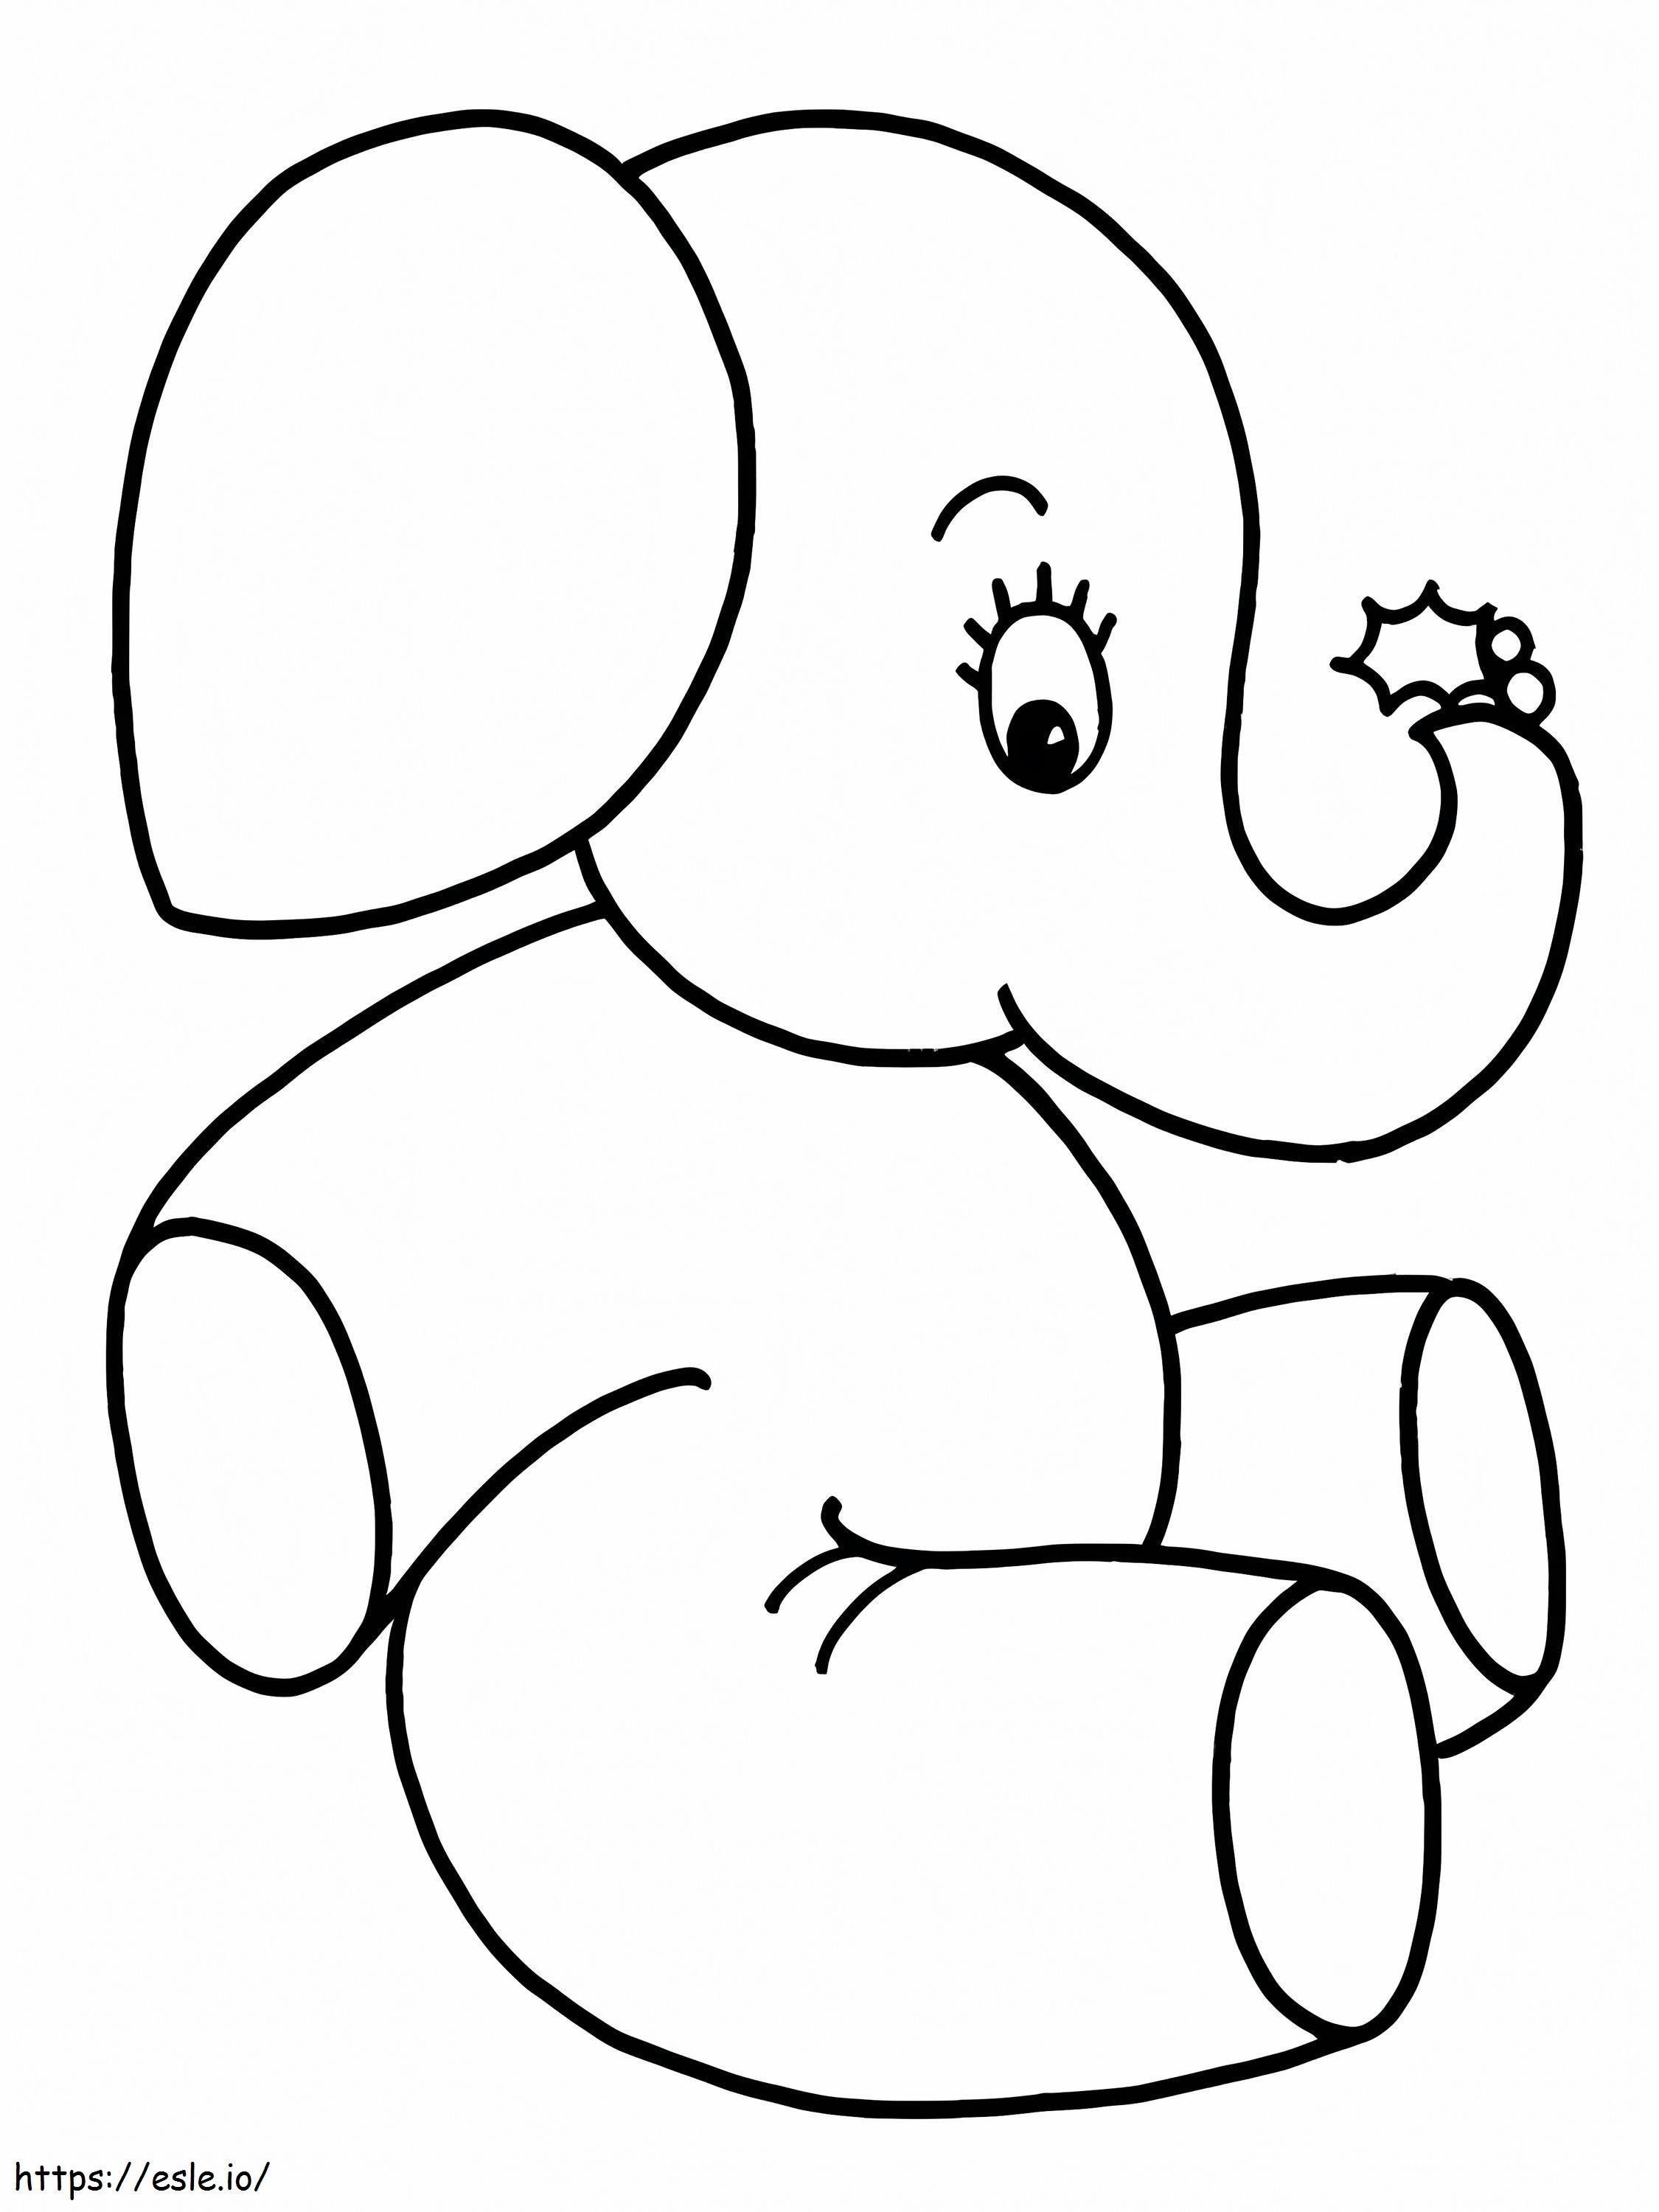 Elephant Mignon coloring page